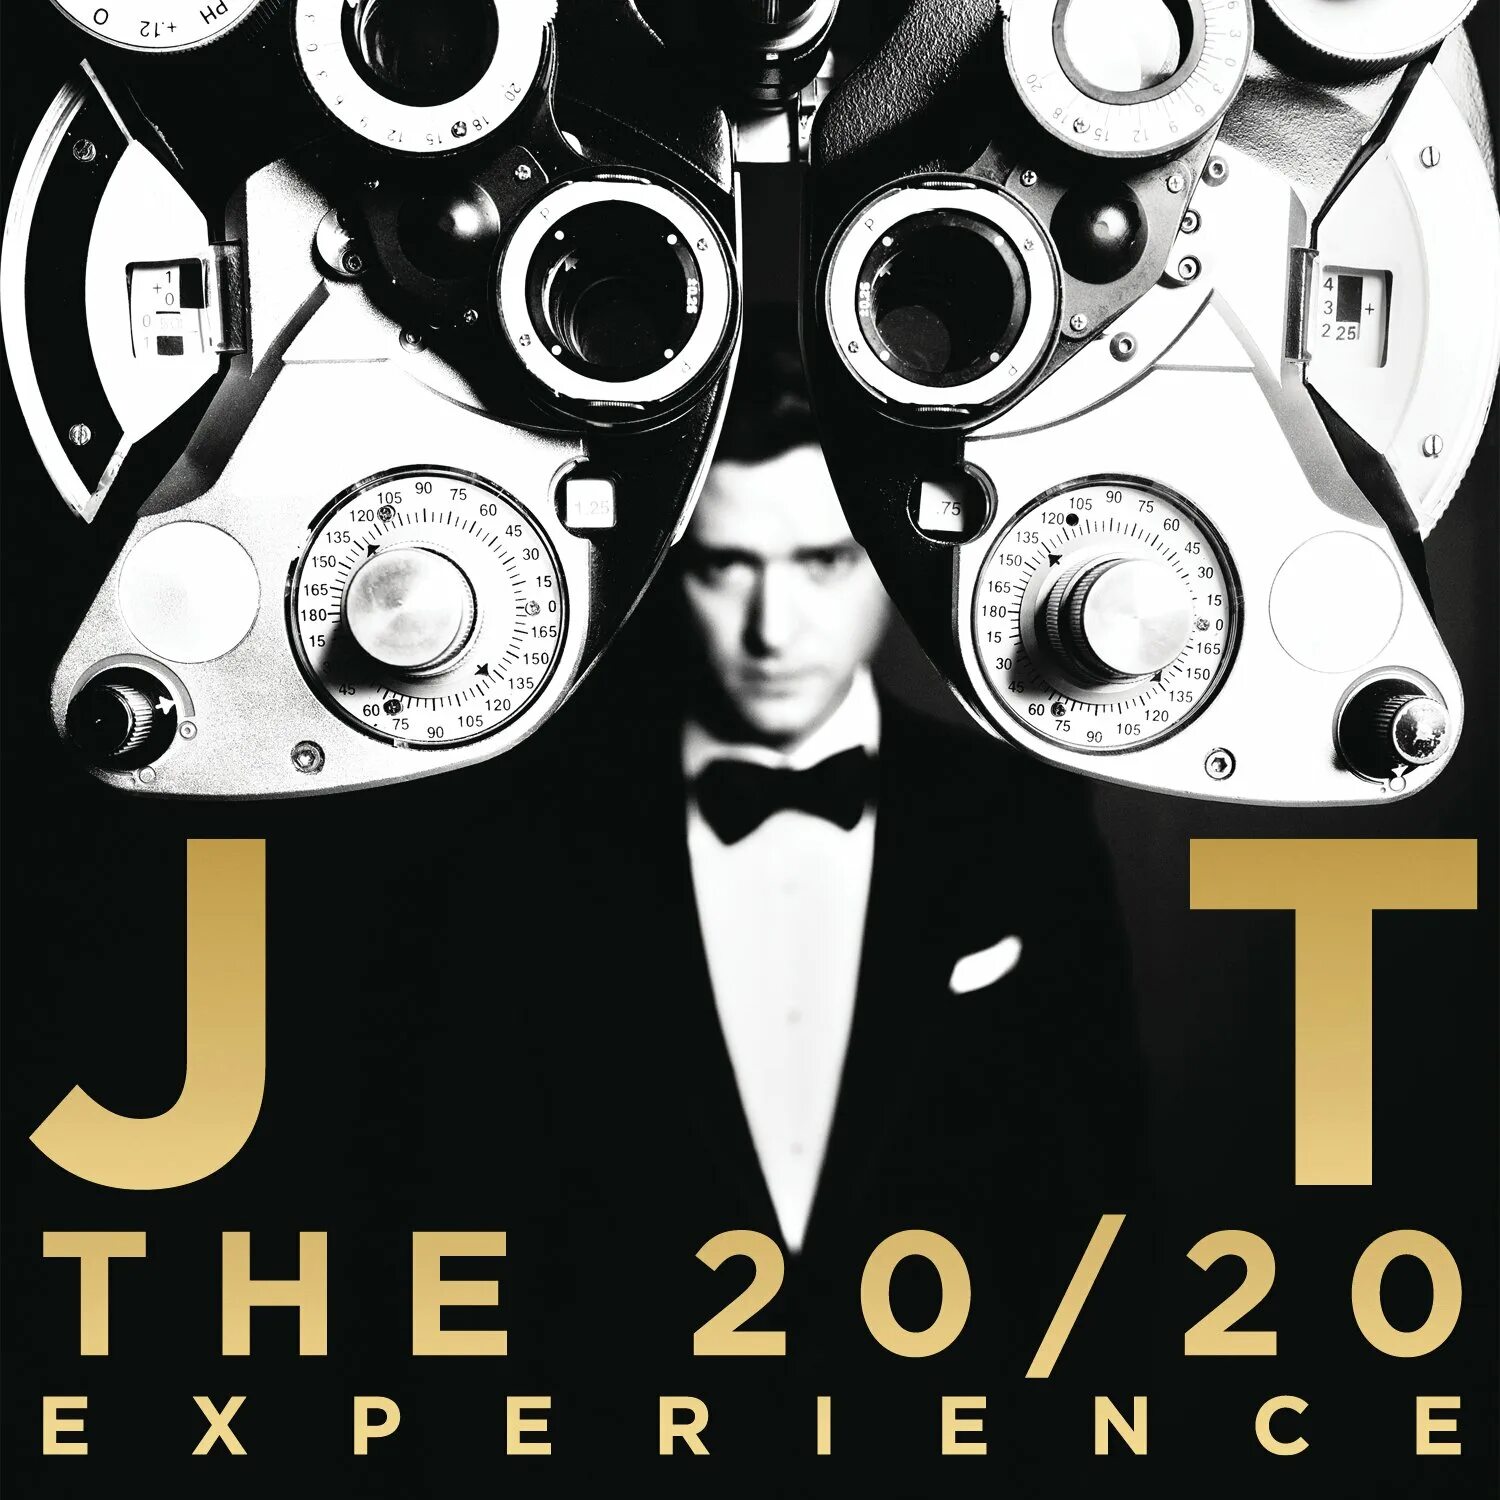 Justin Timberlake 20/20 experience. Justin Timberlake 20/20 experience Cover. Джастин Тимберлейк альбомы. Justin Timberlake обложка альбома. 20 20 experience